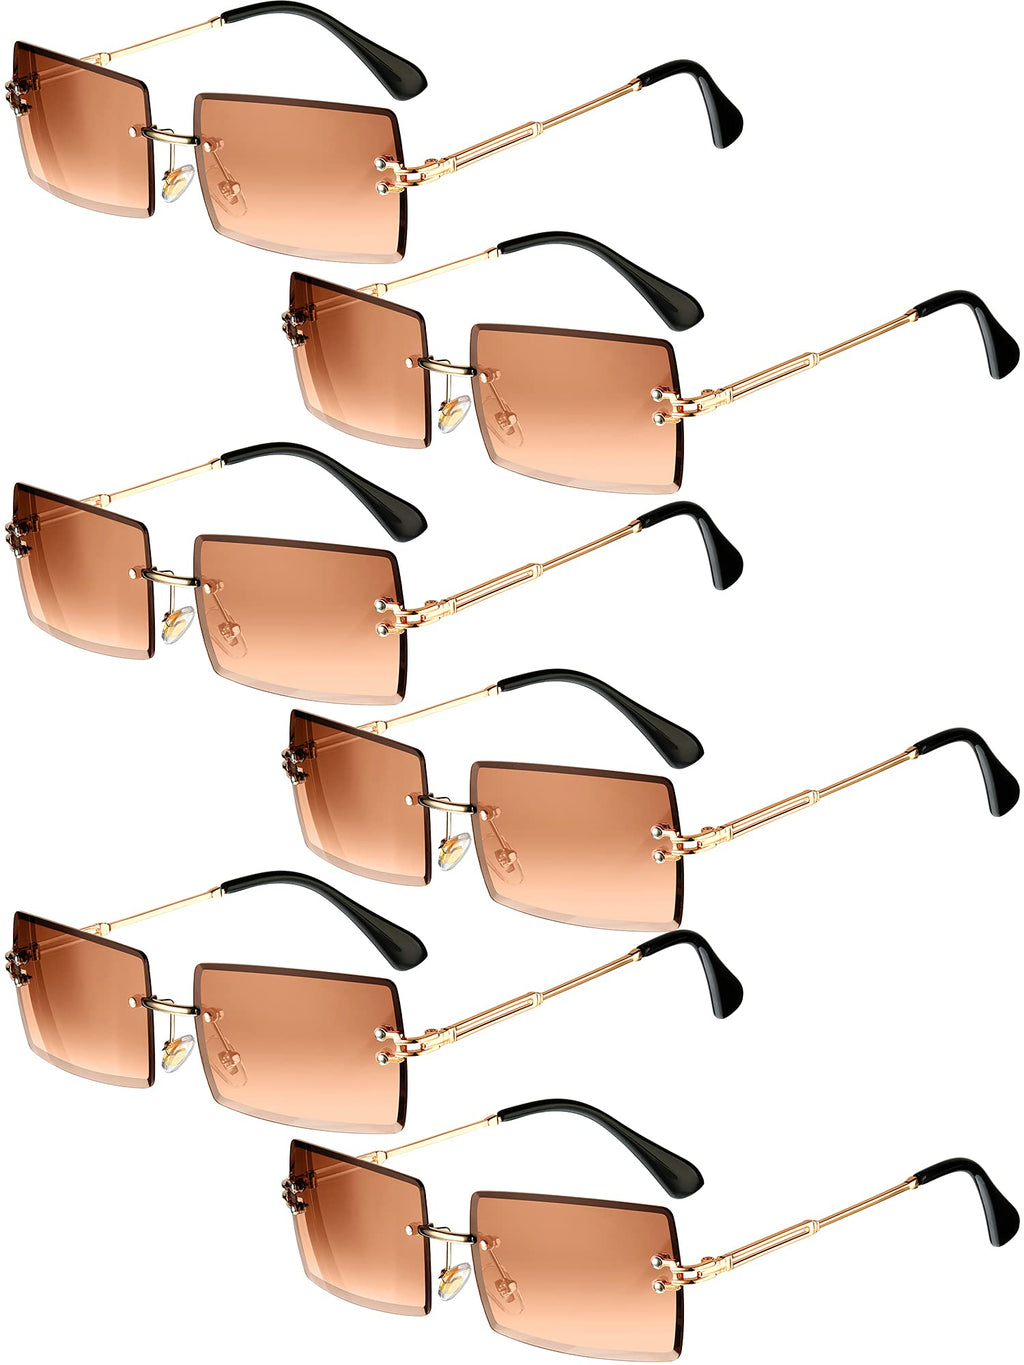 [Australia] - 6 Pairs Rimless Rectangle Sunglasses Chic Frameless Square Glasses Candy Color Unisex Glasses Eyewear for Women Men Brown 